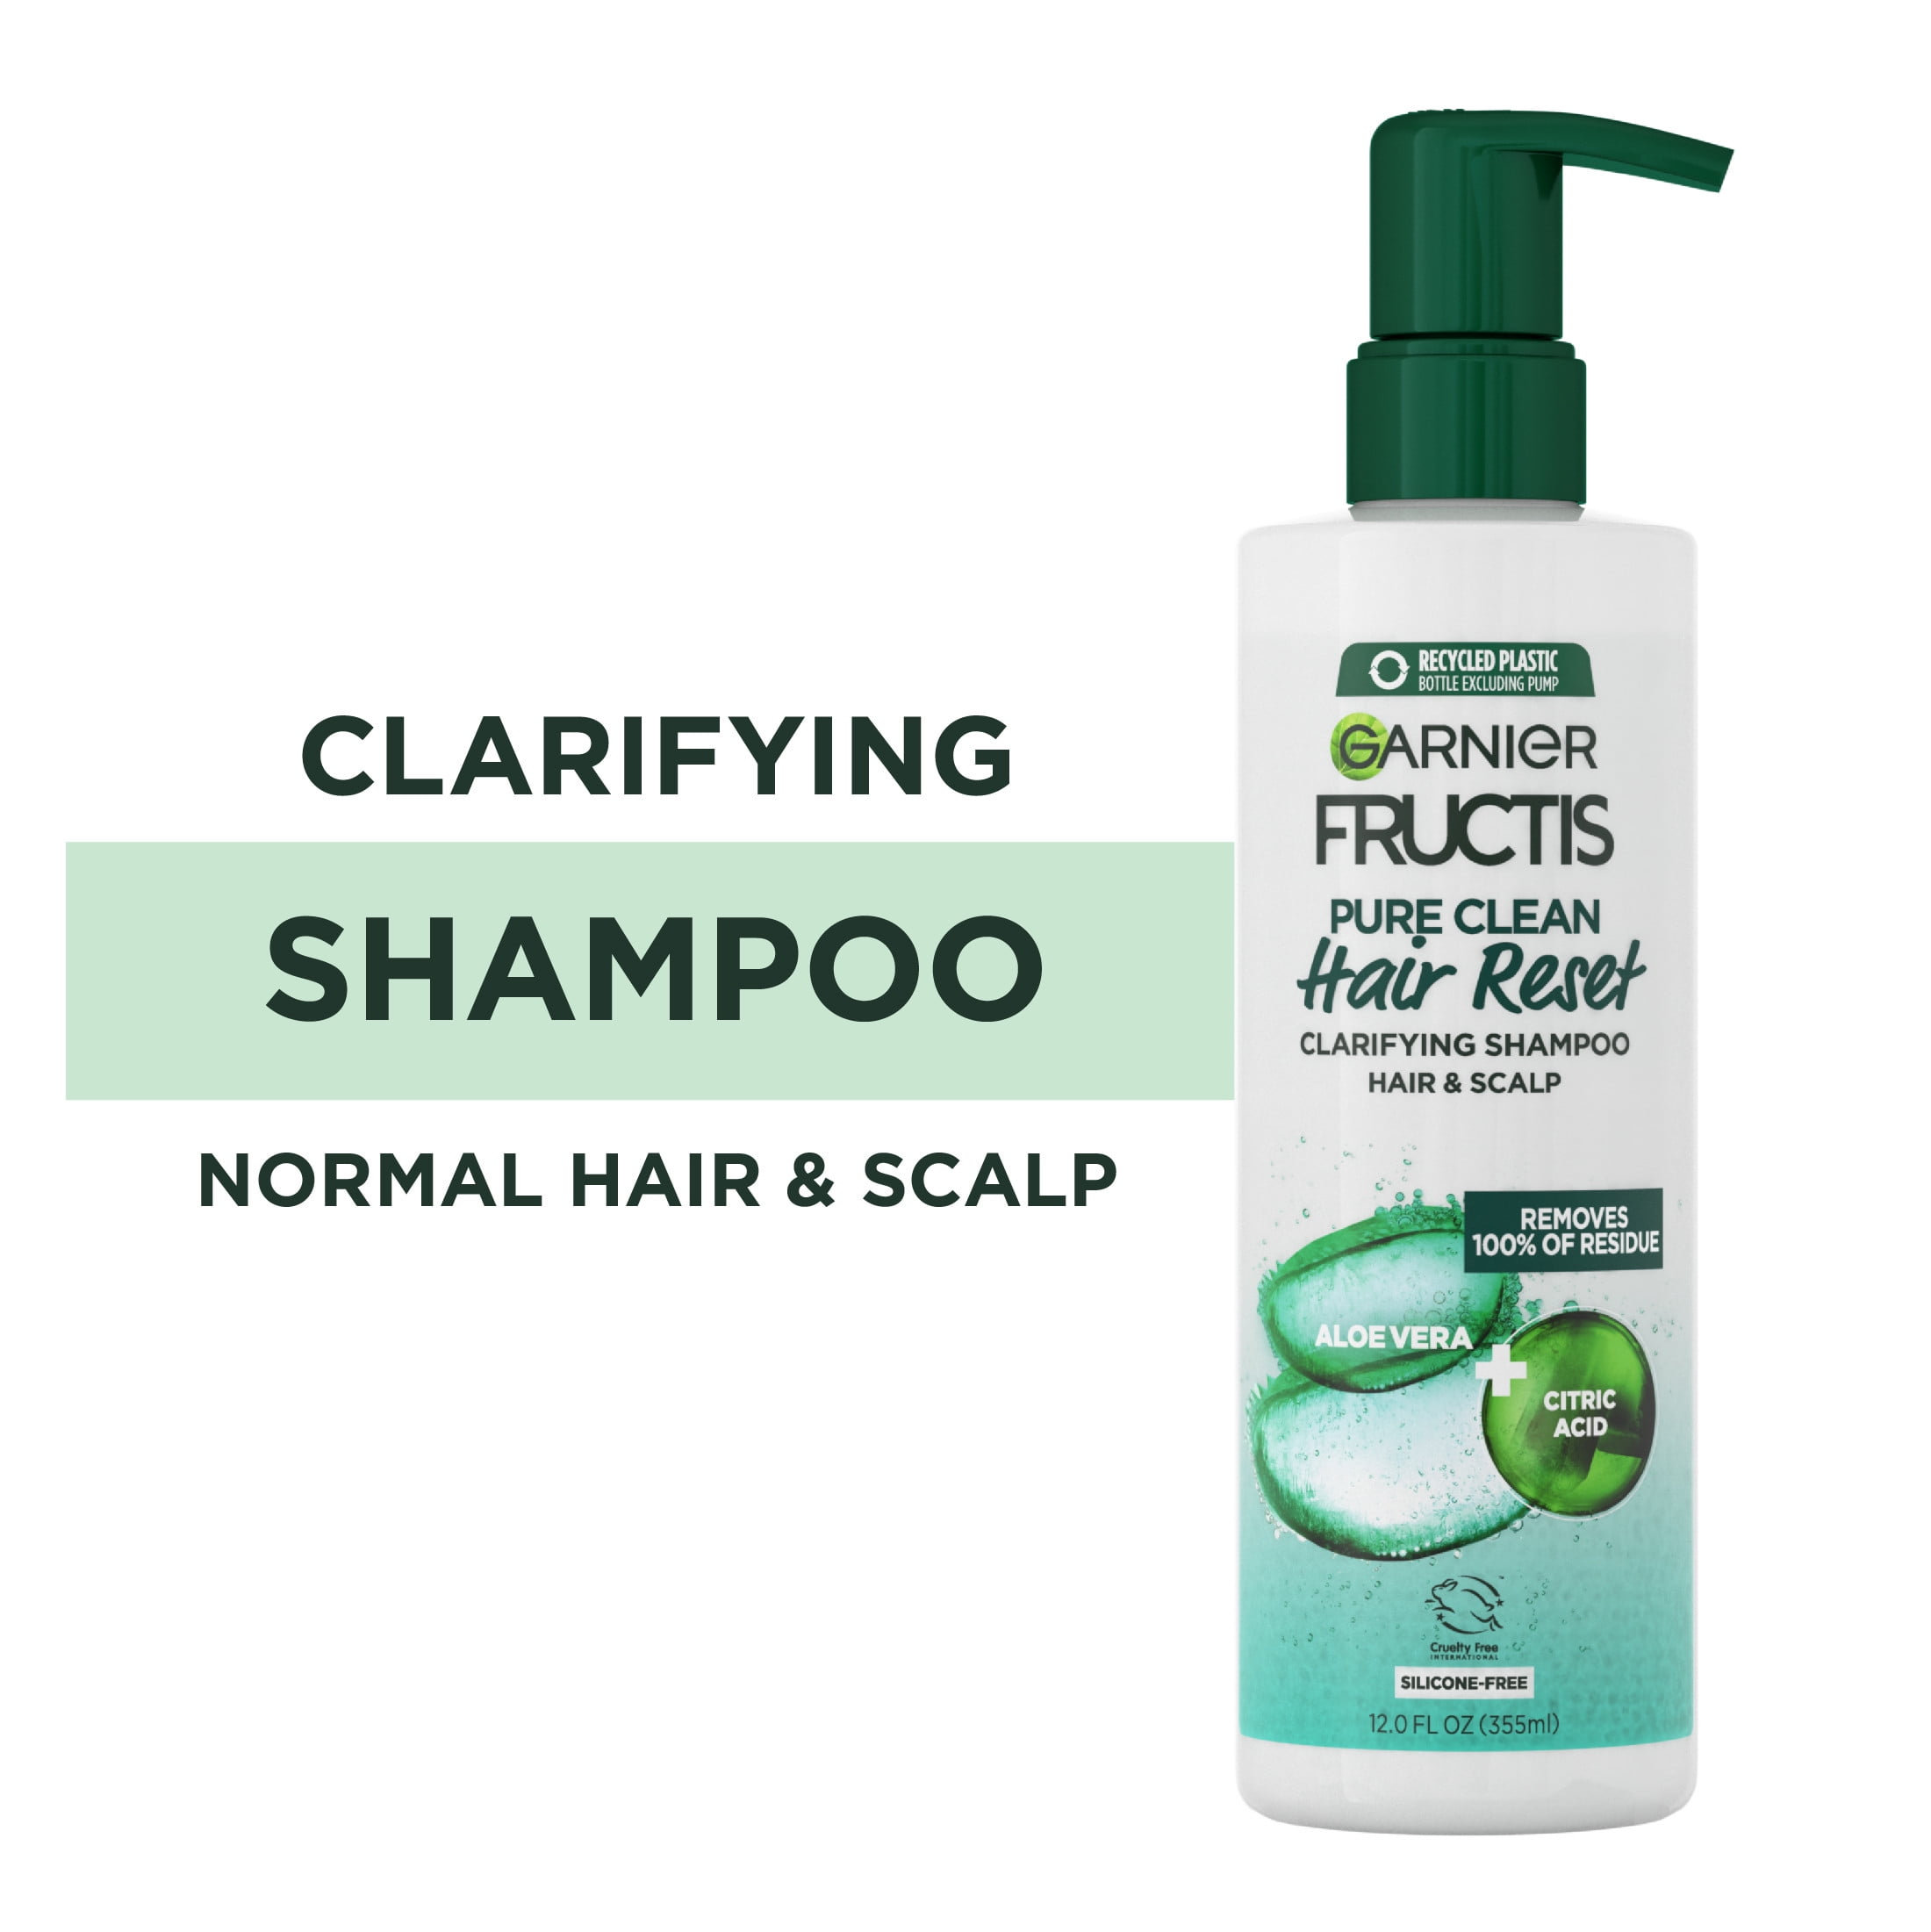 Garnier Fructis Pure Clean Hair Reset Clarifying Shampoo, Aloe Vera, 12 fl oz